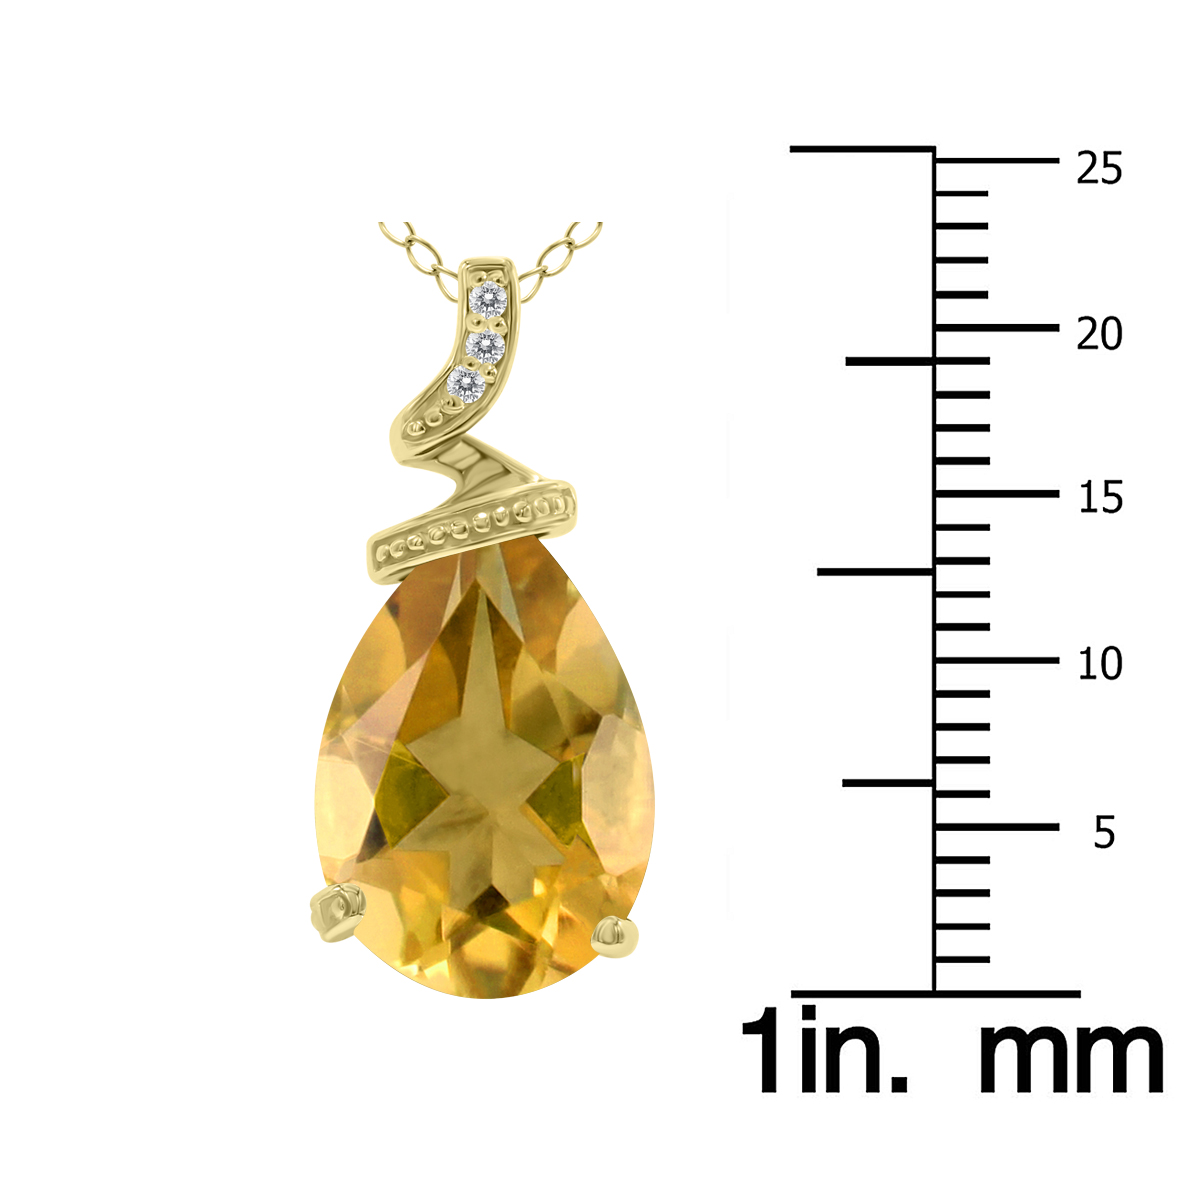 szul.com 5 Carat Pear Shaped Citrine & Diamond Pendant in 10K Yellow Gold